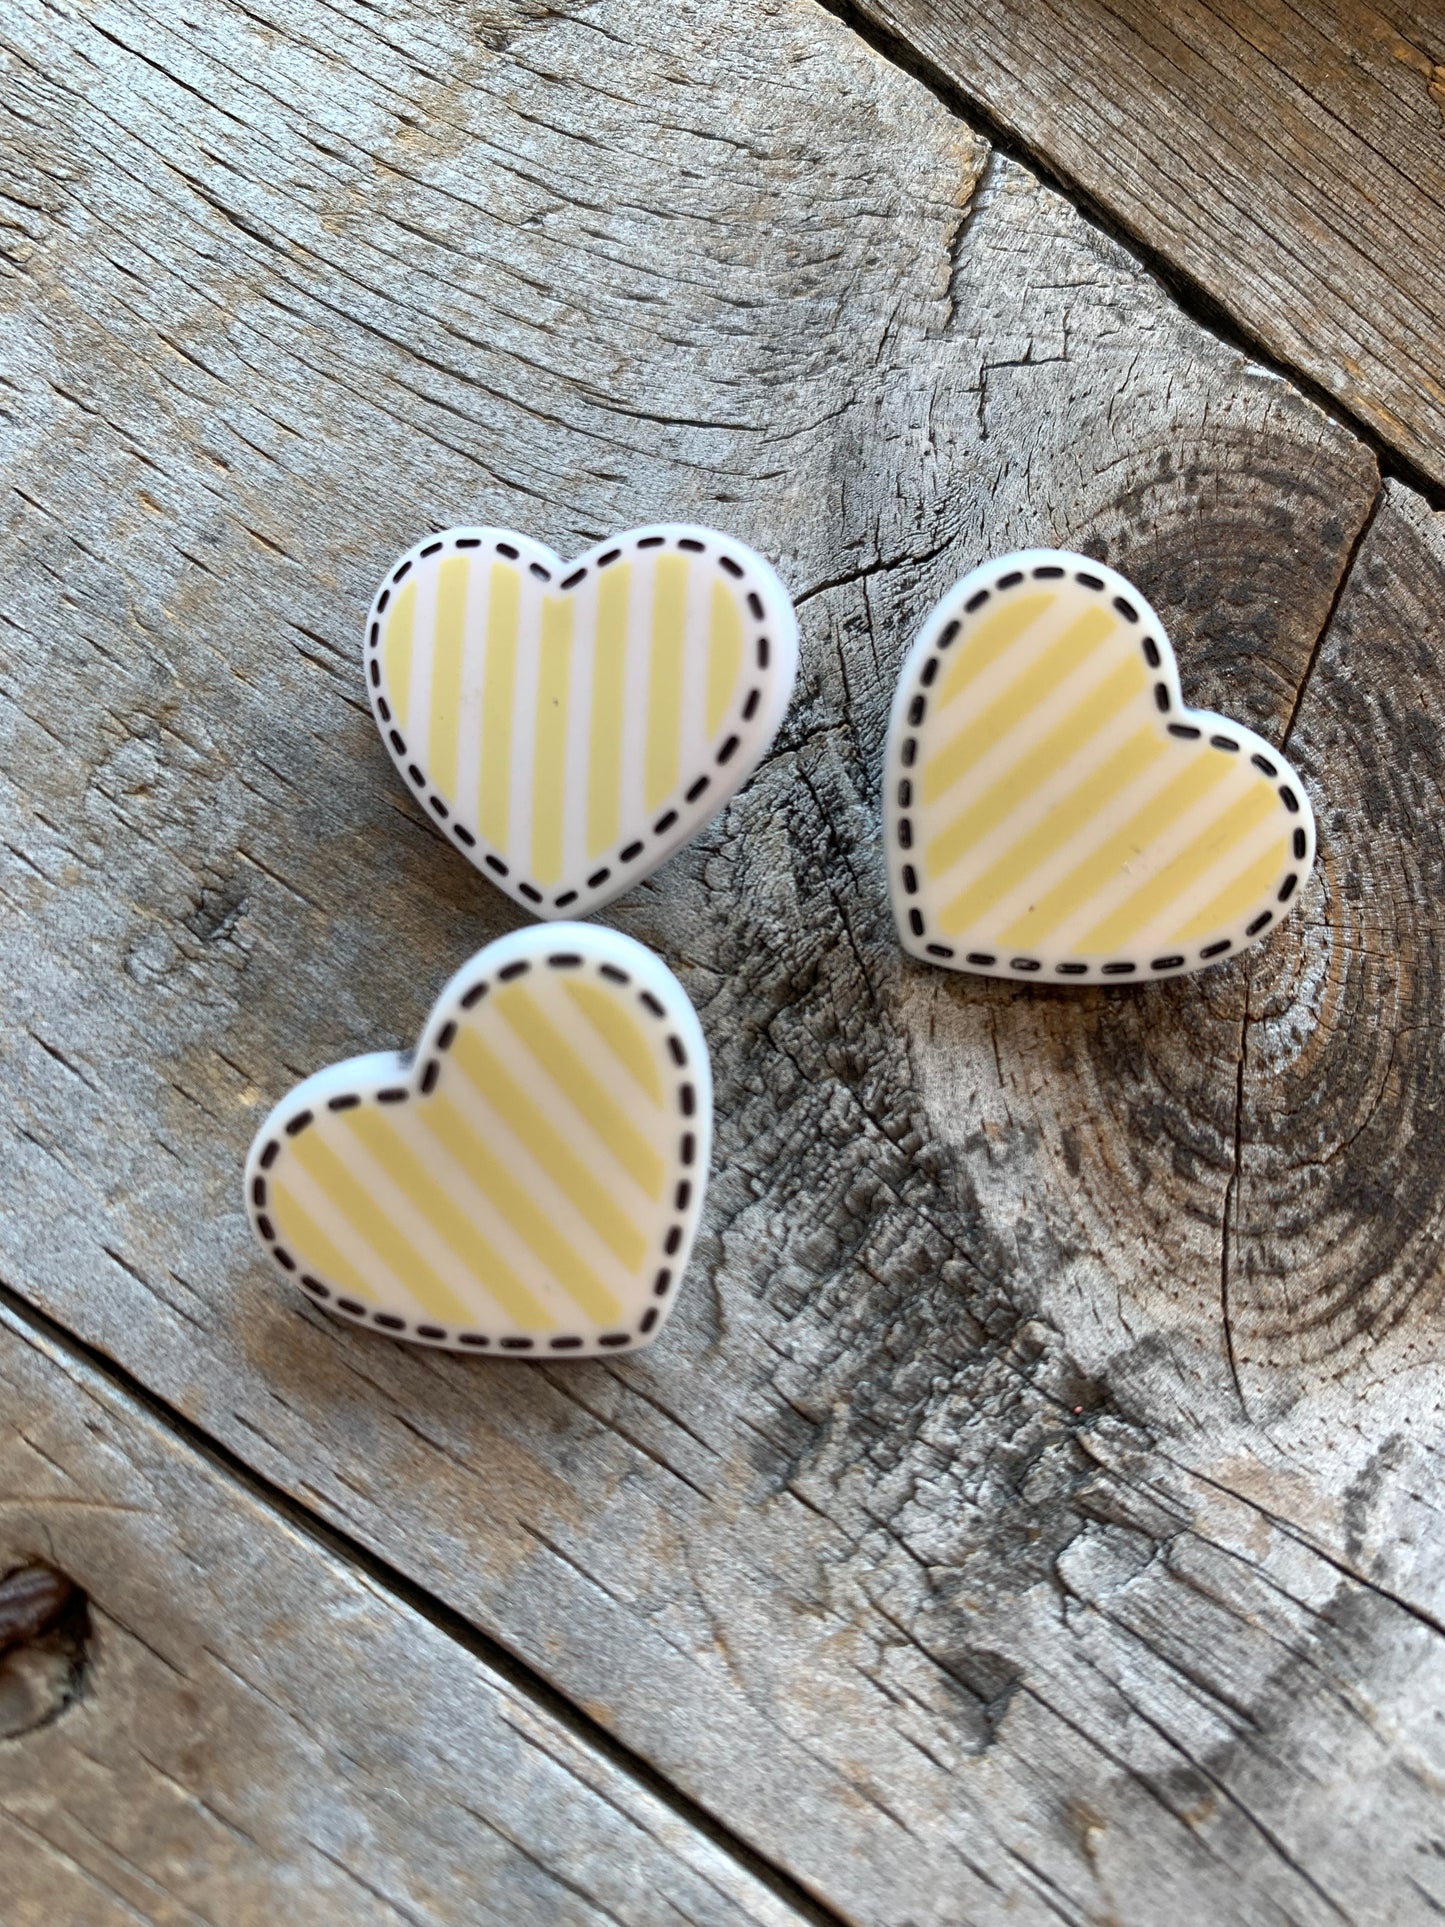 Boutons coeurs jaunes 2cm / Yellow heart button 0,8''